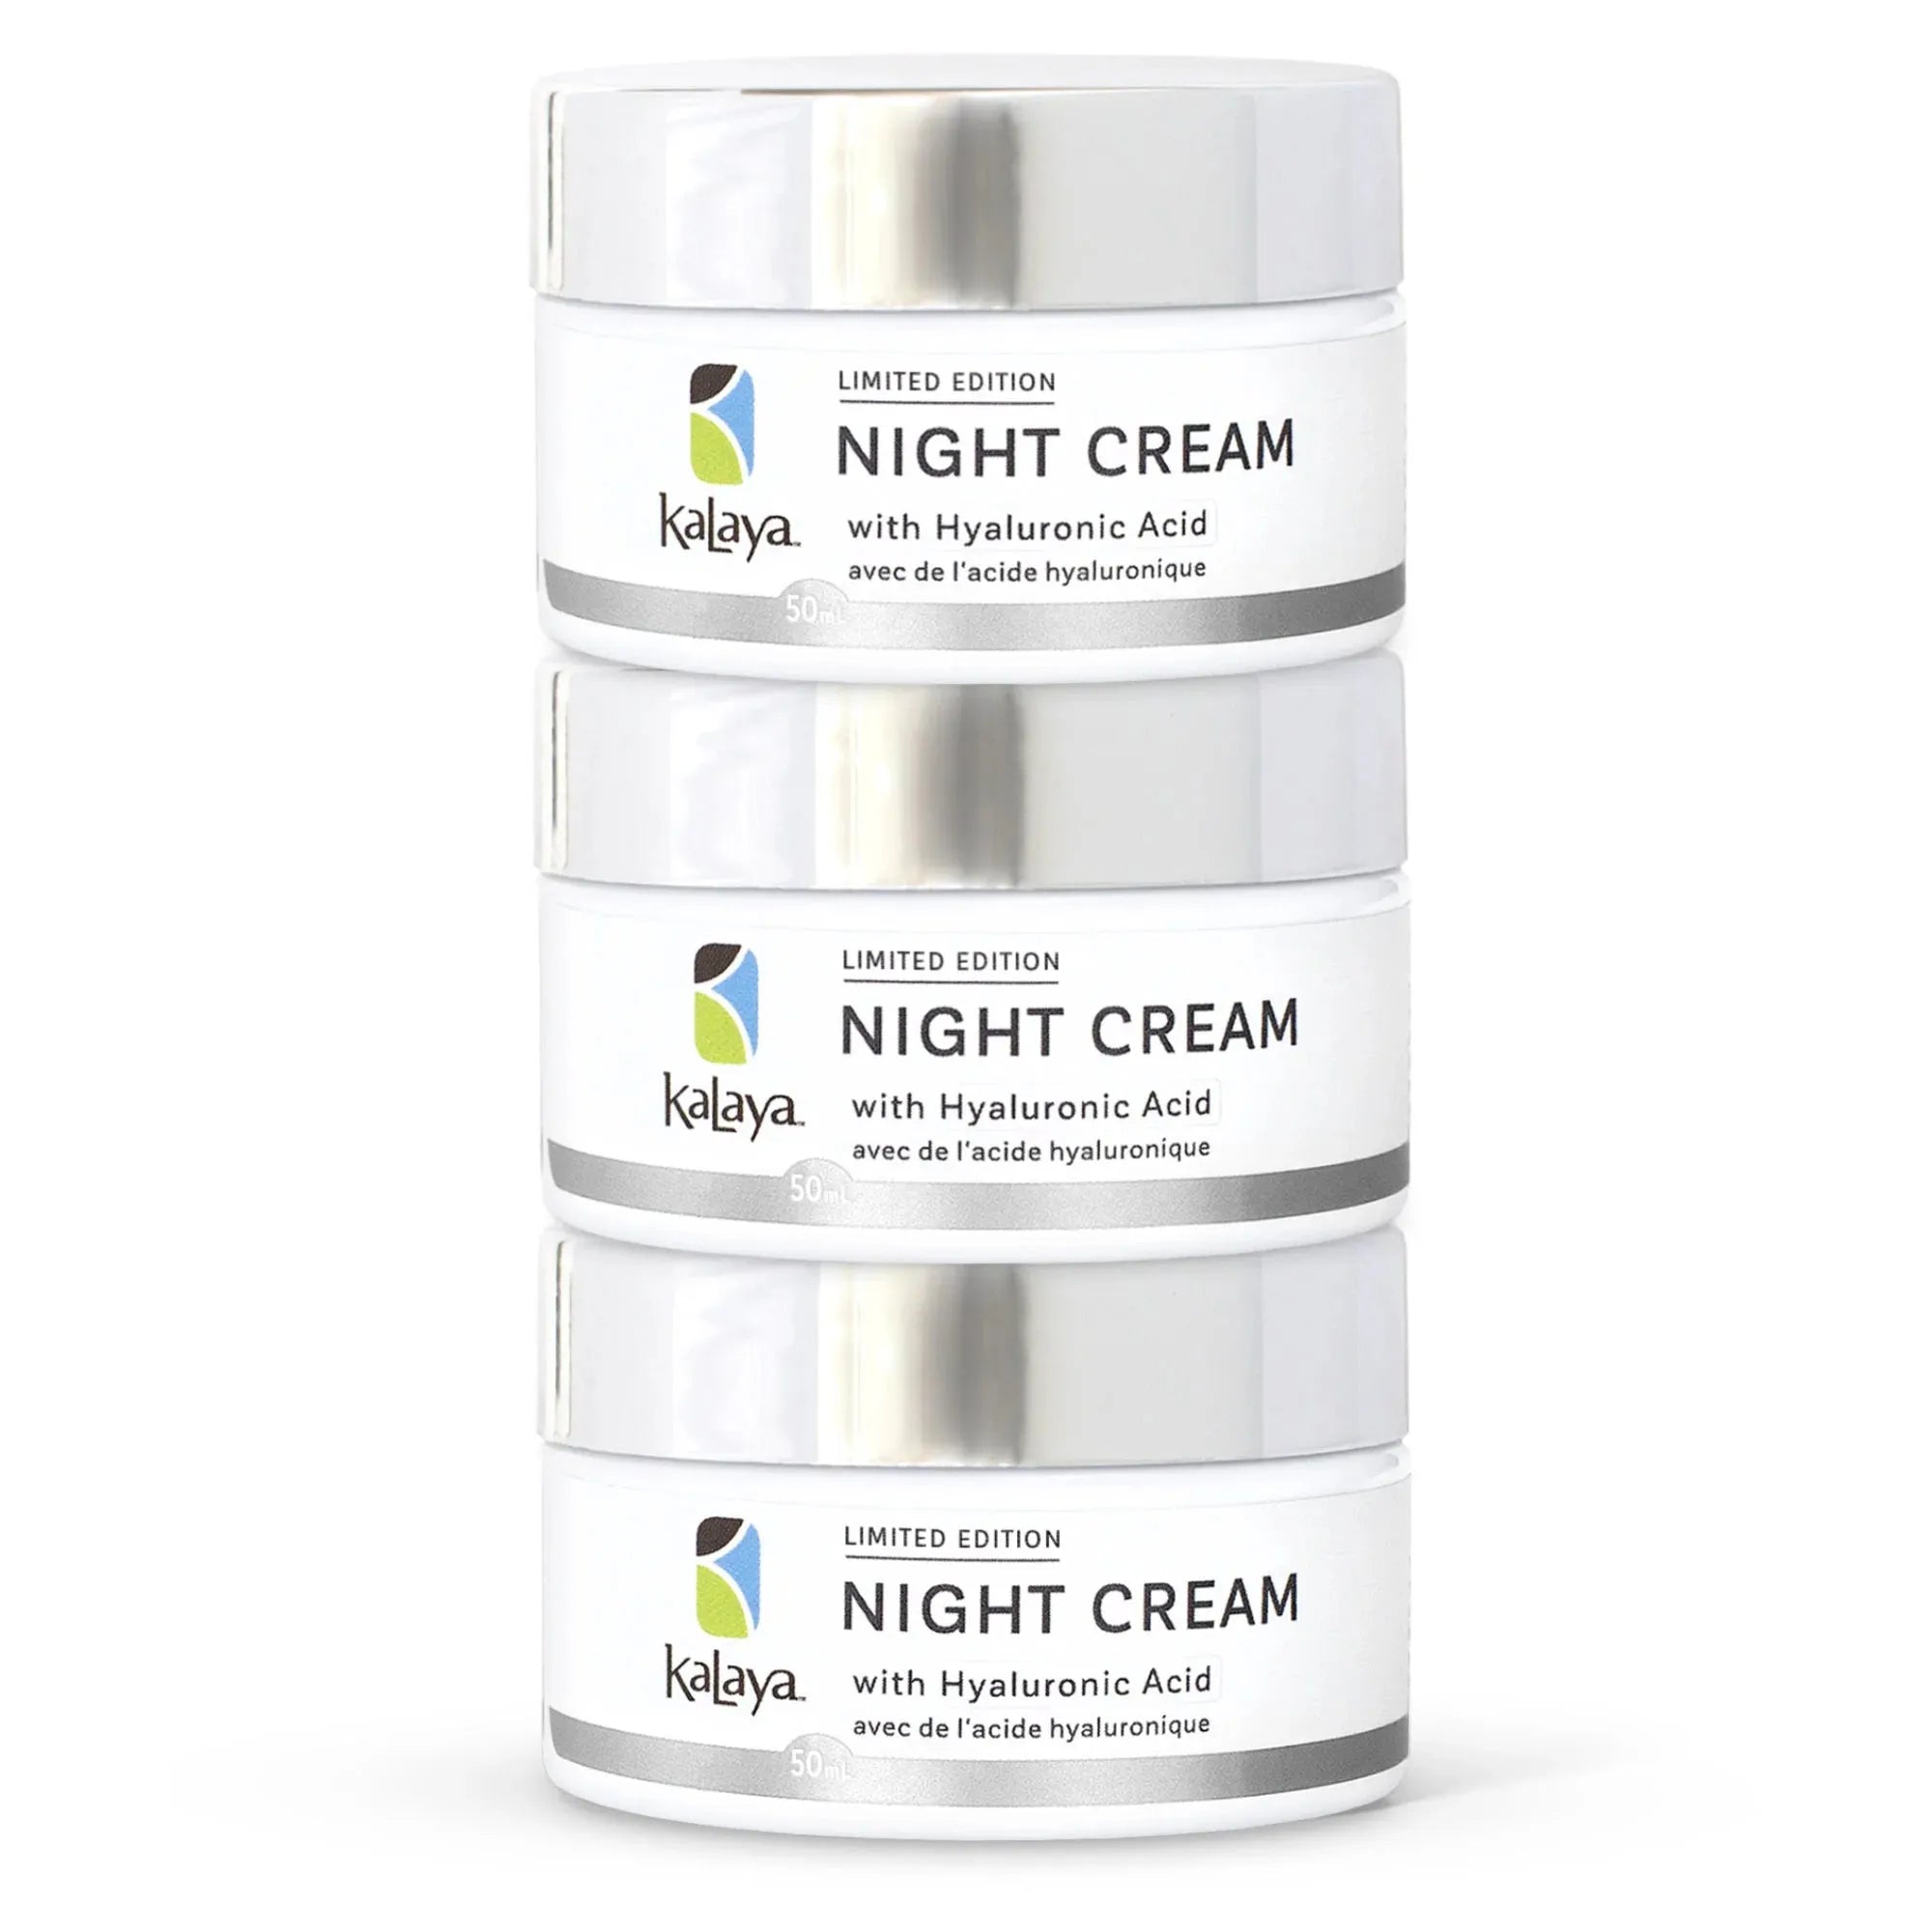 KaLaya Night Cream with Hyaluronic Acid (Limited Edition)